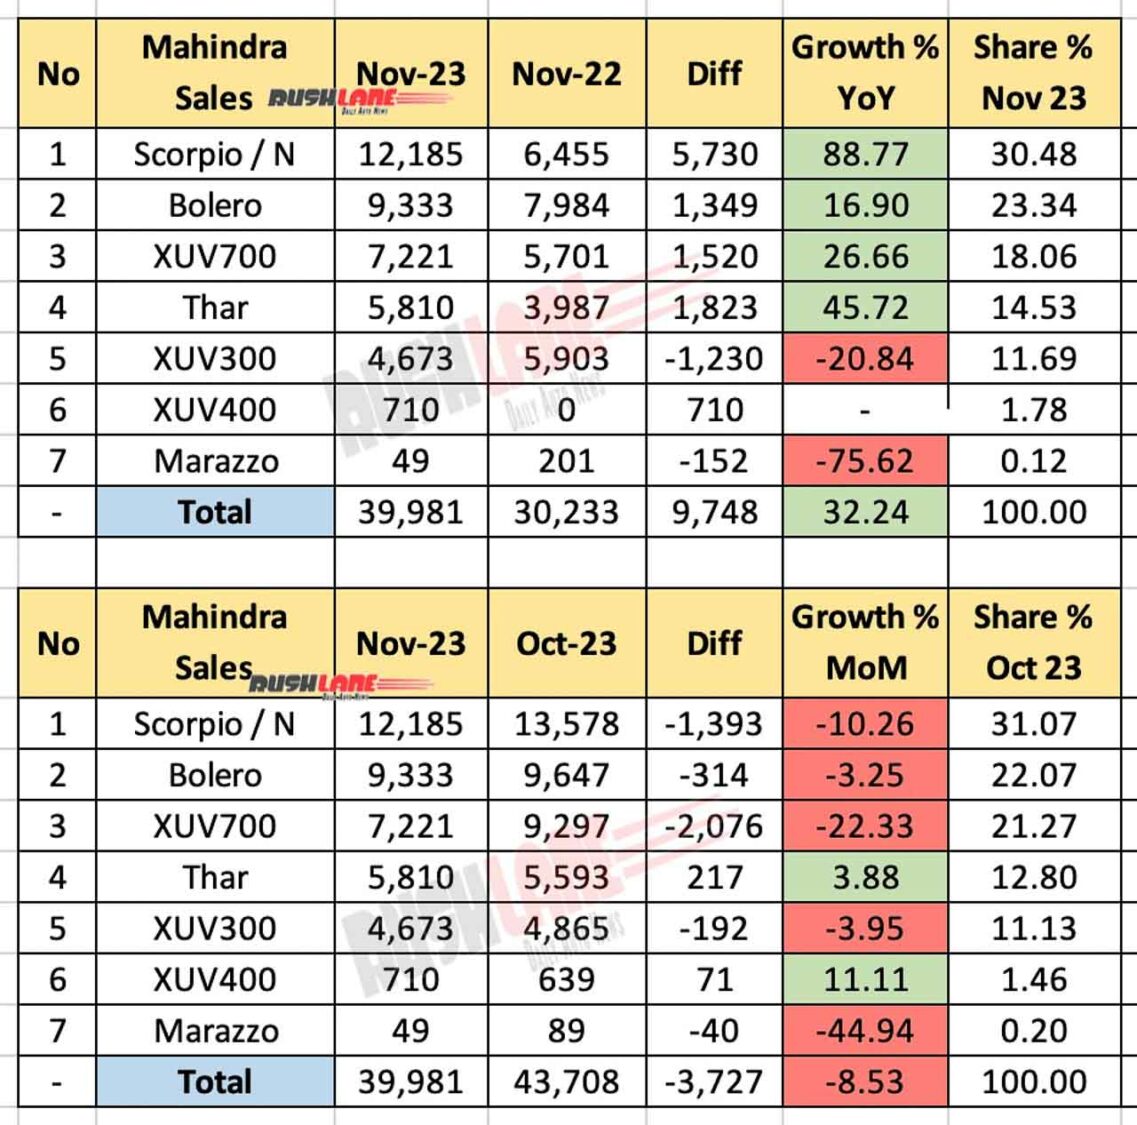 Mahindra sales breakup Nov 2023